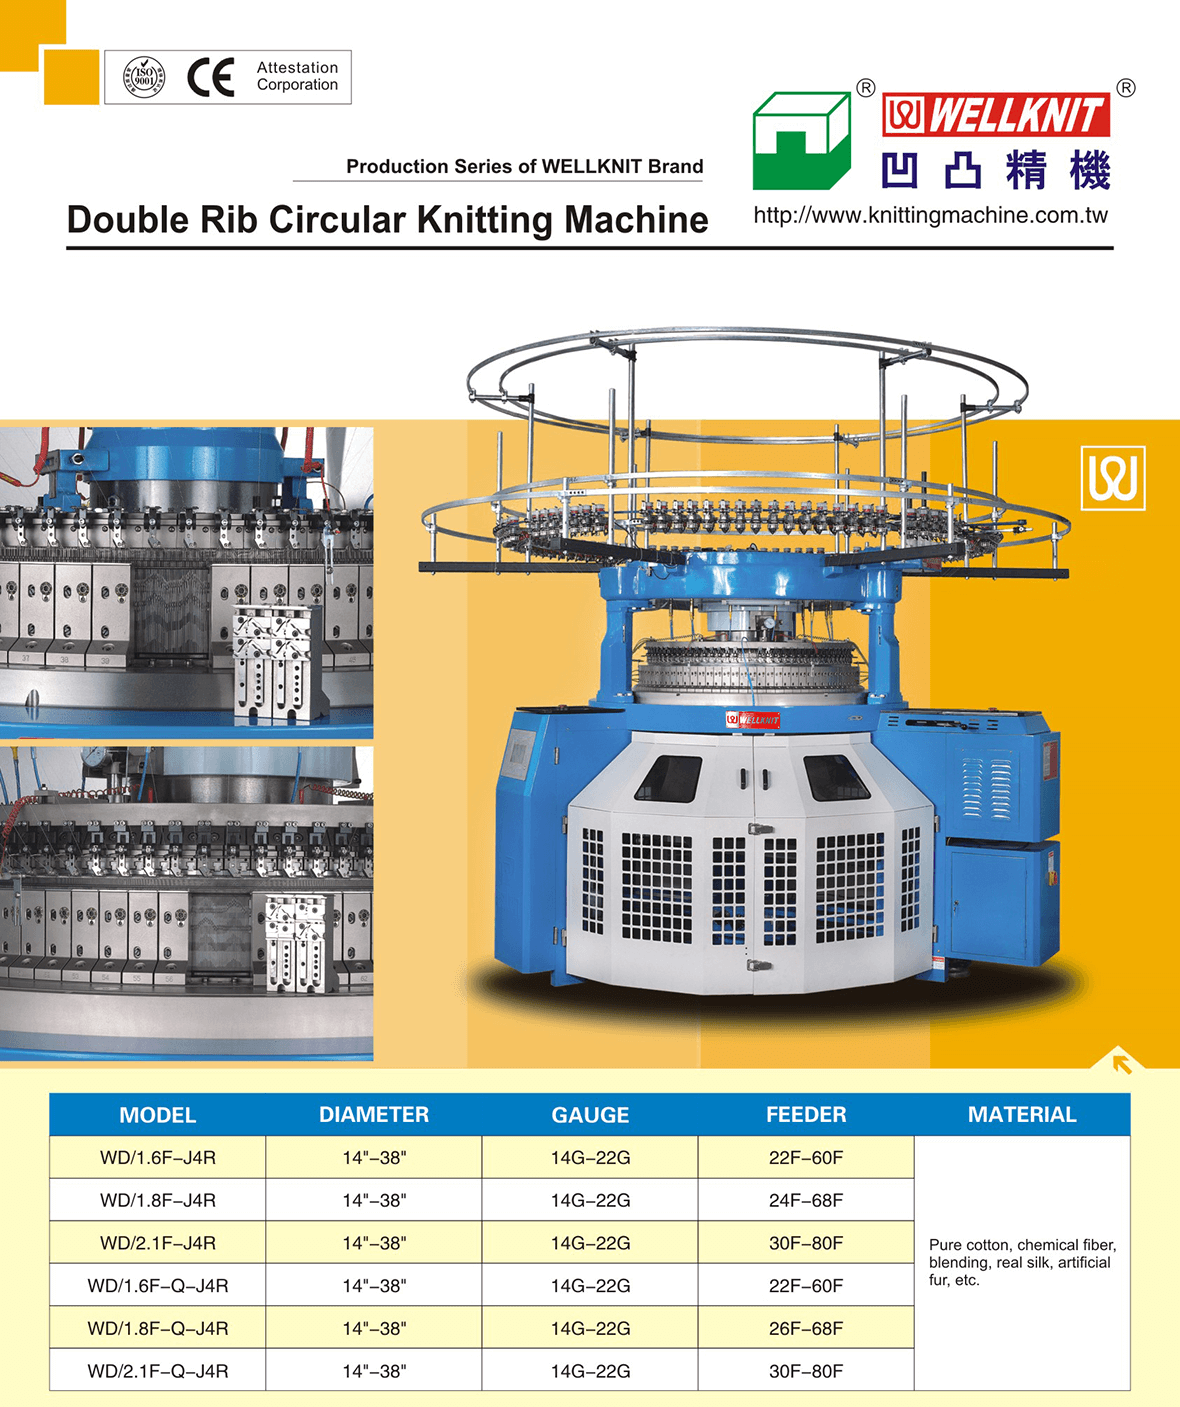 Double Rib Circular Knitting Machine from China manufacturer - Wellknit